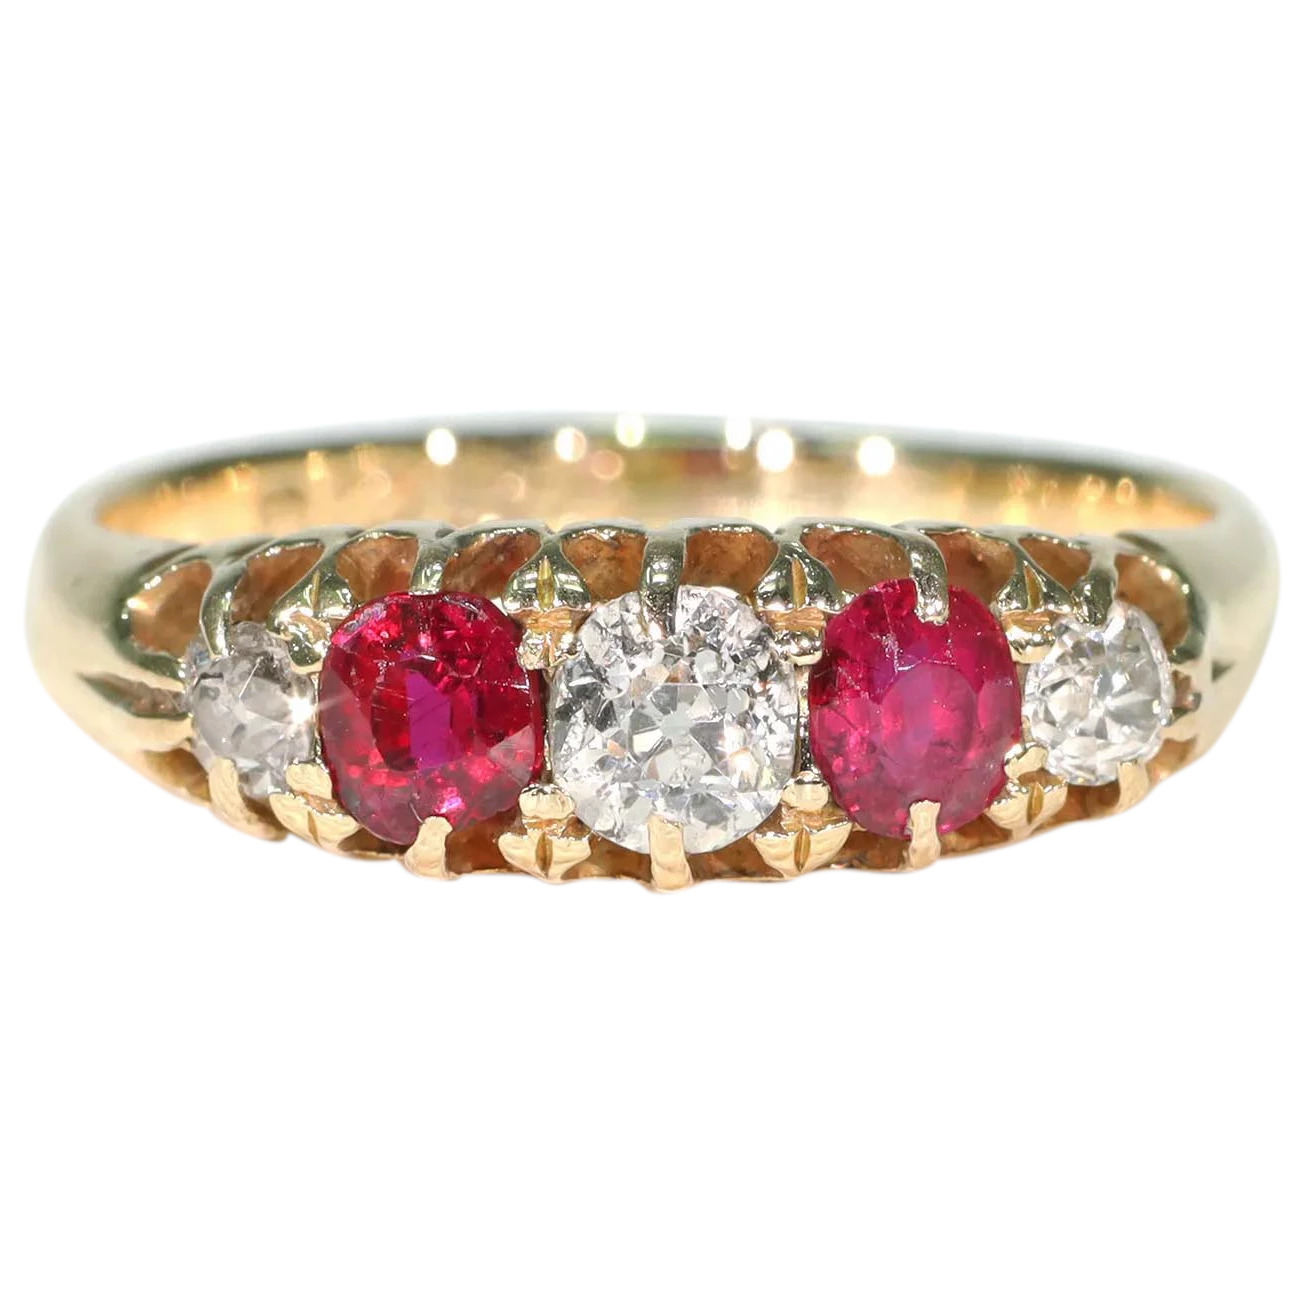 Antique 5 Stone Ruby Diamond Ring Victorian